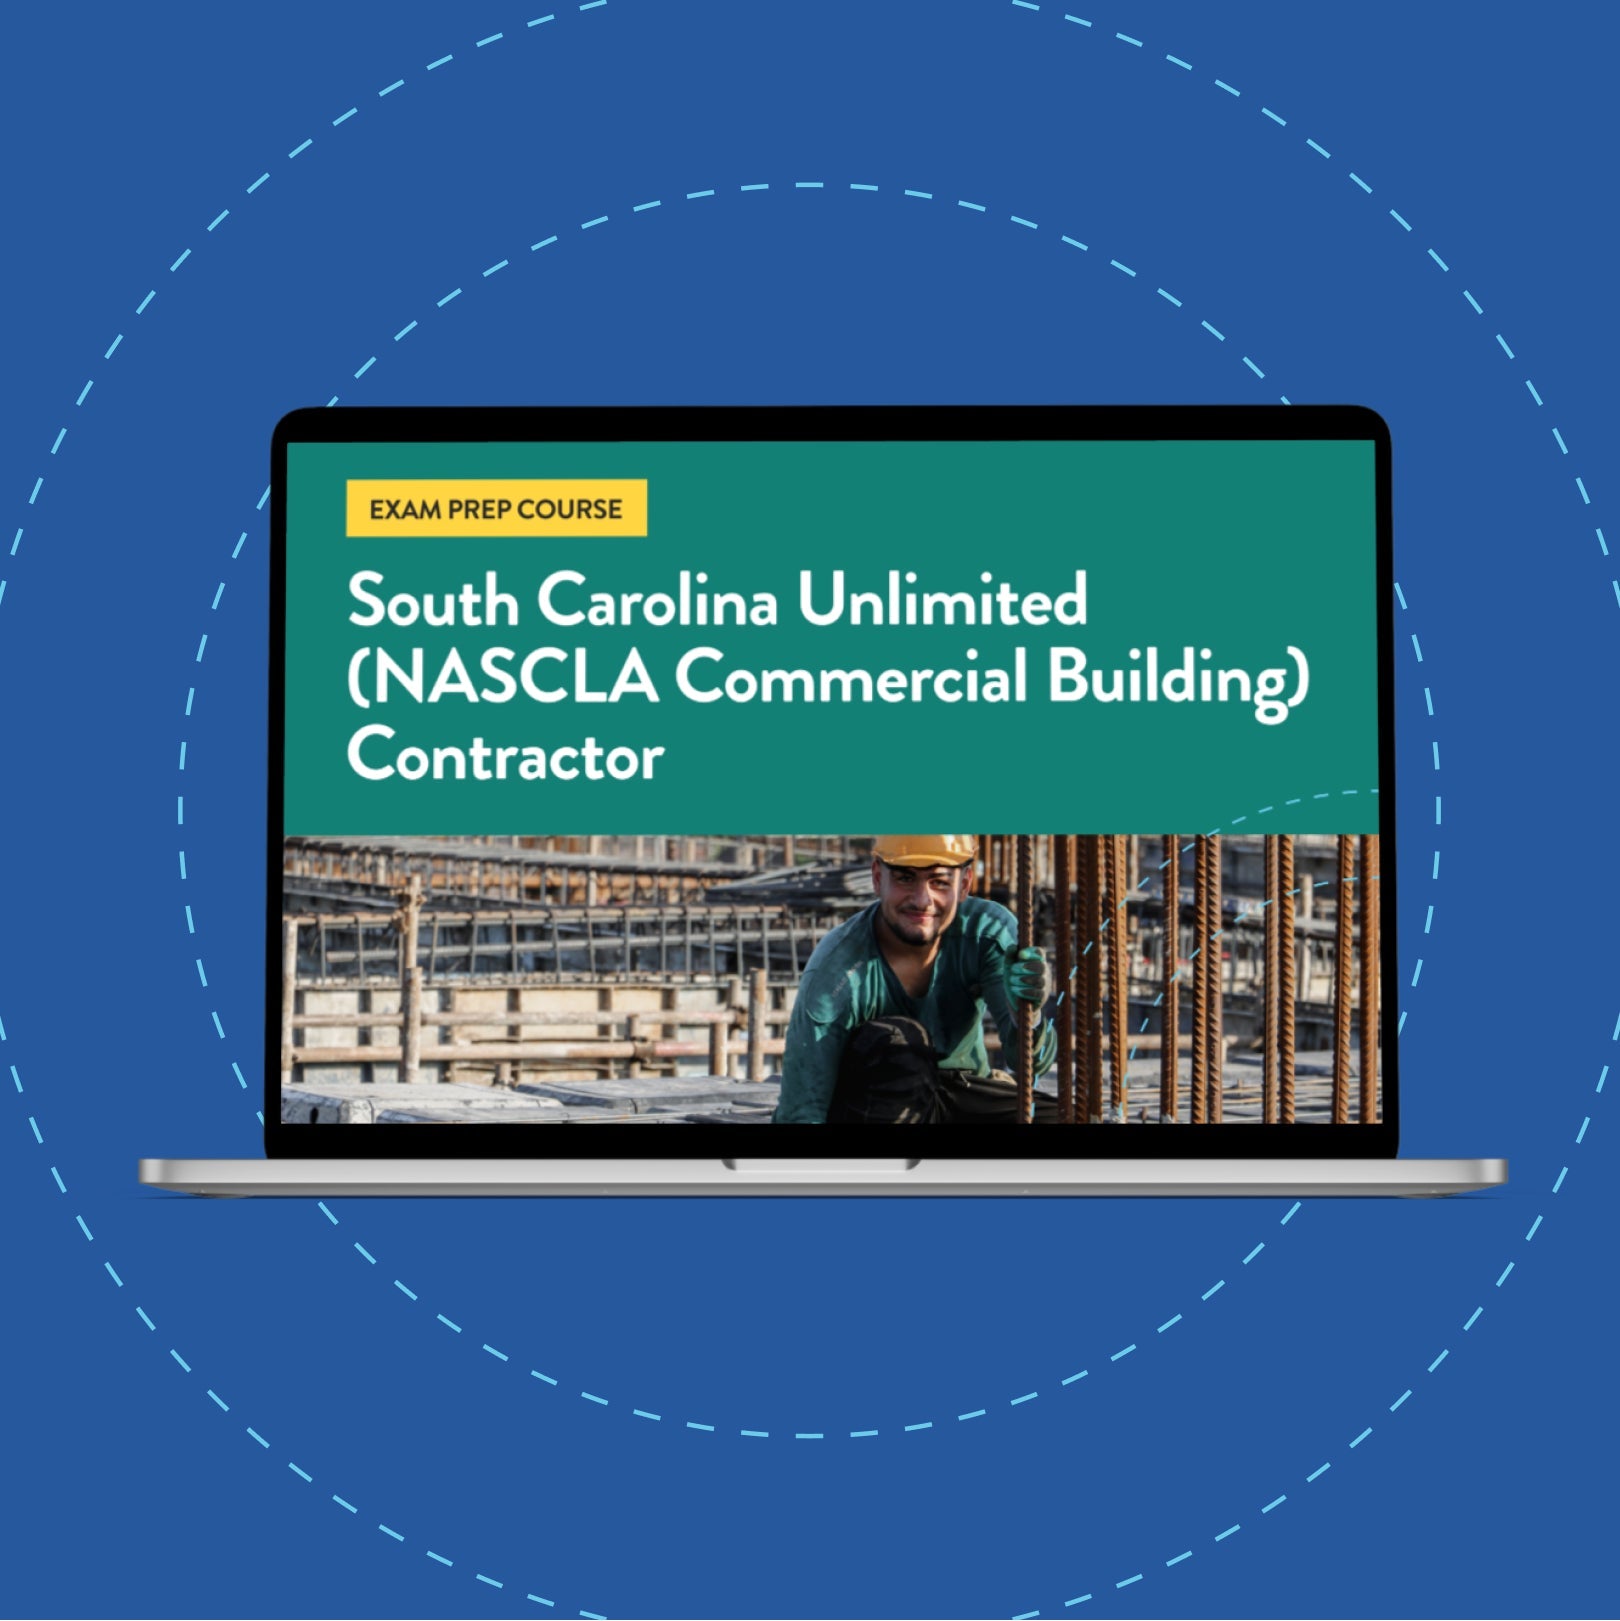 South Carolina Unlimited (NASCLA Commercial Building) Contractor Exam Prep Course